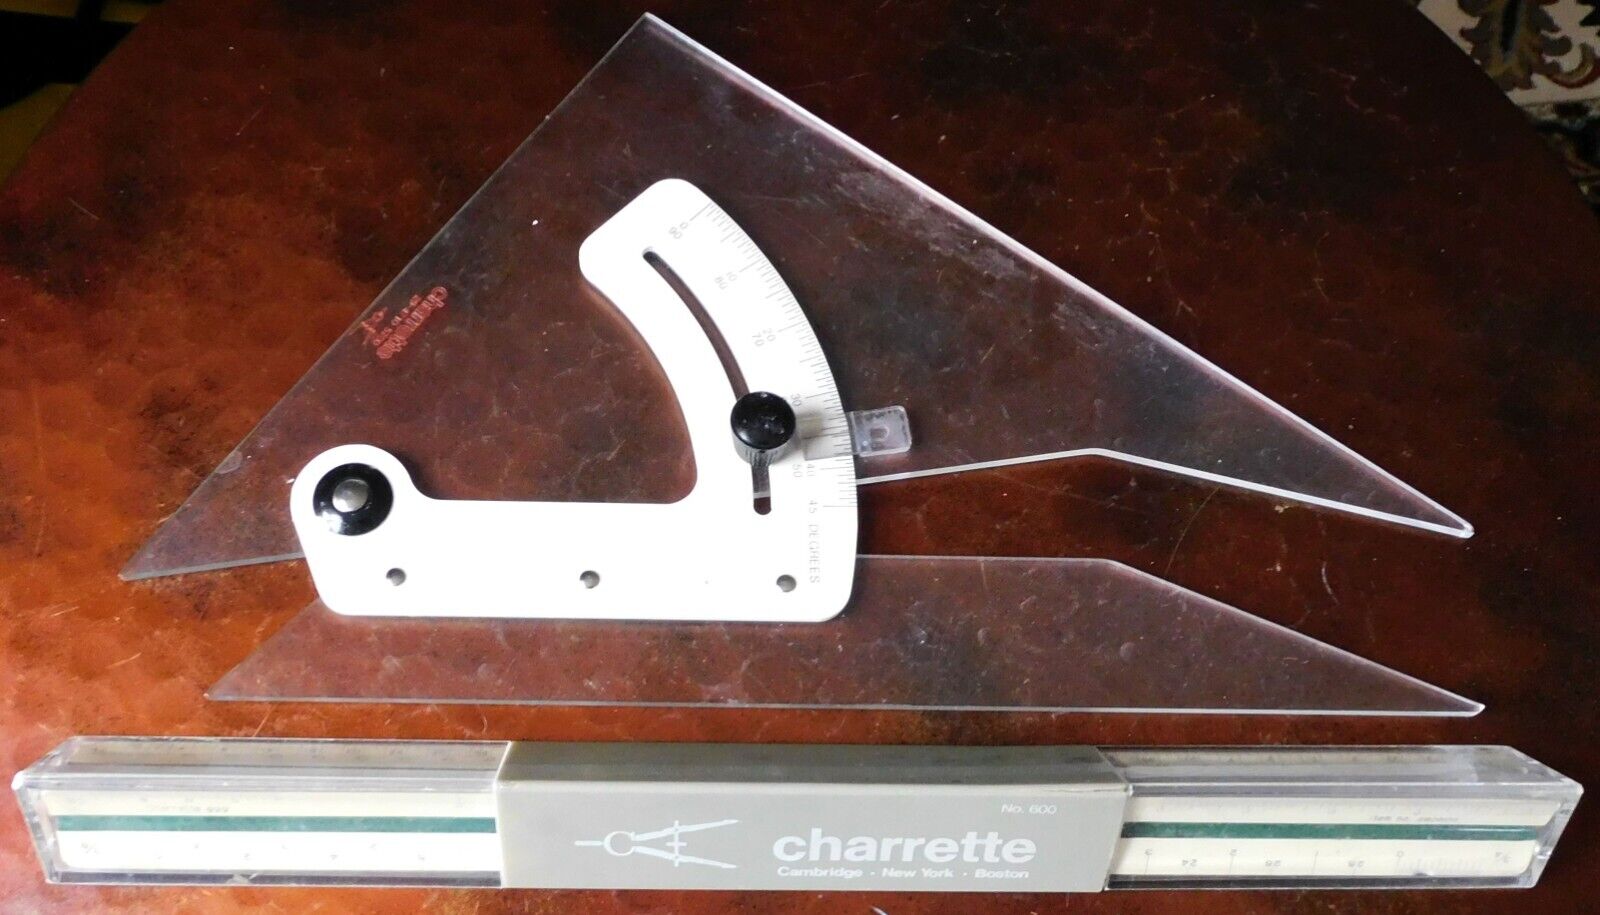 Charrette Triangular Architectural Ruler No 600 + Angle Finder Protractor 5700